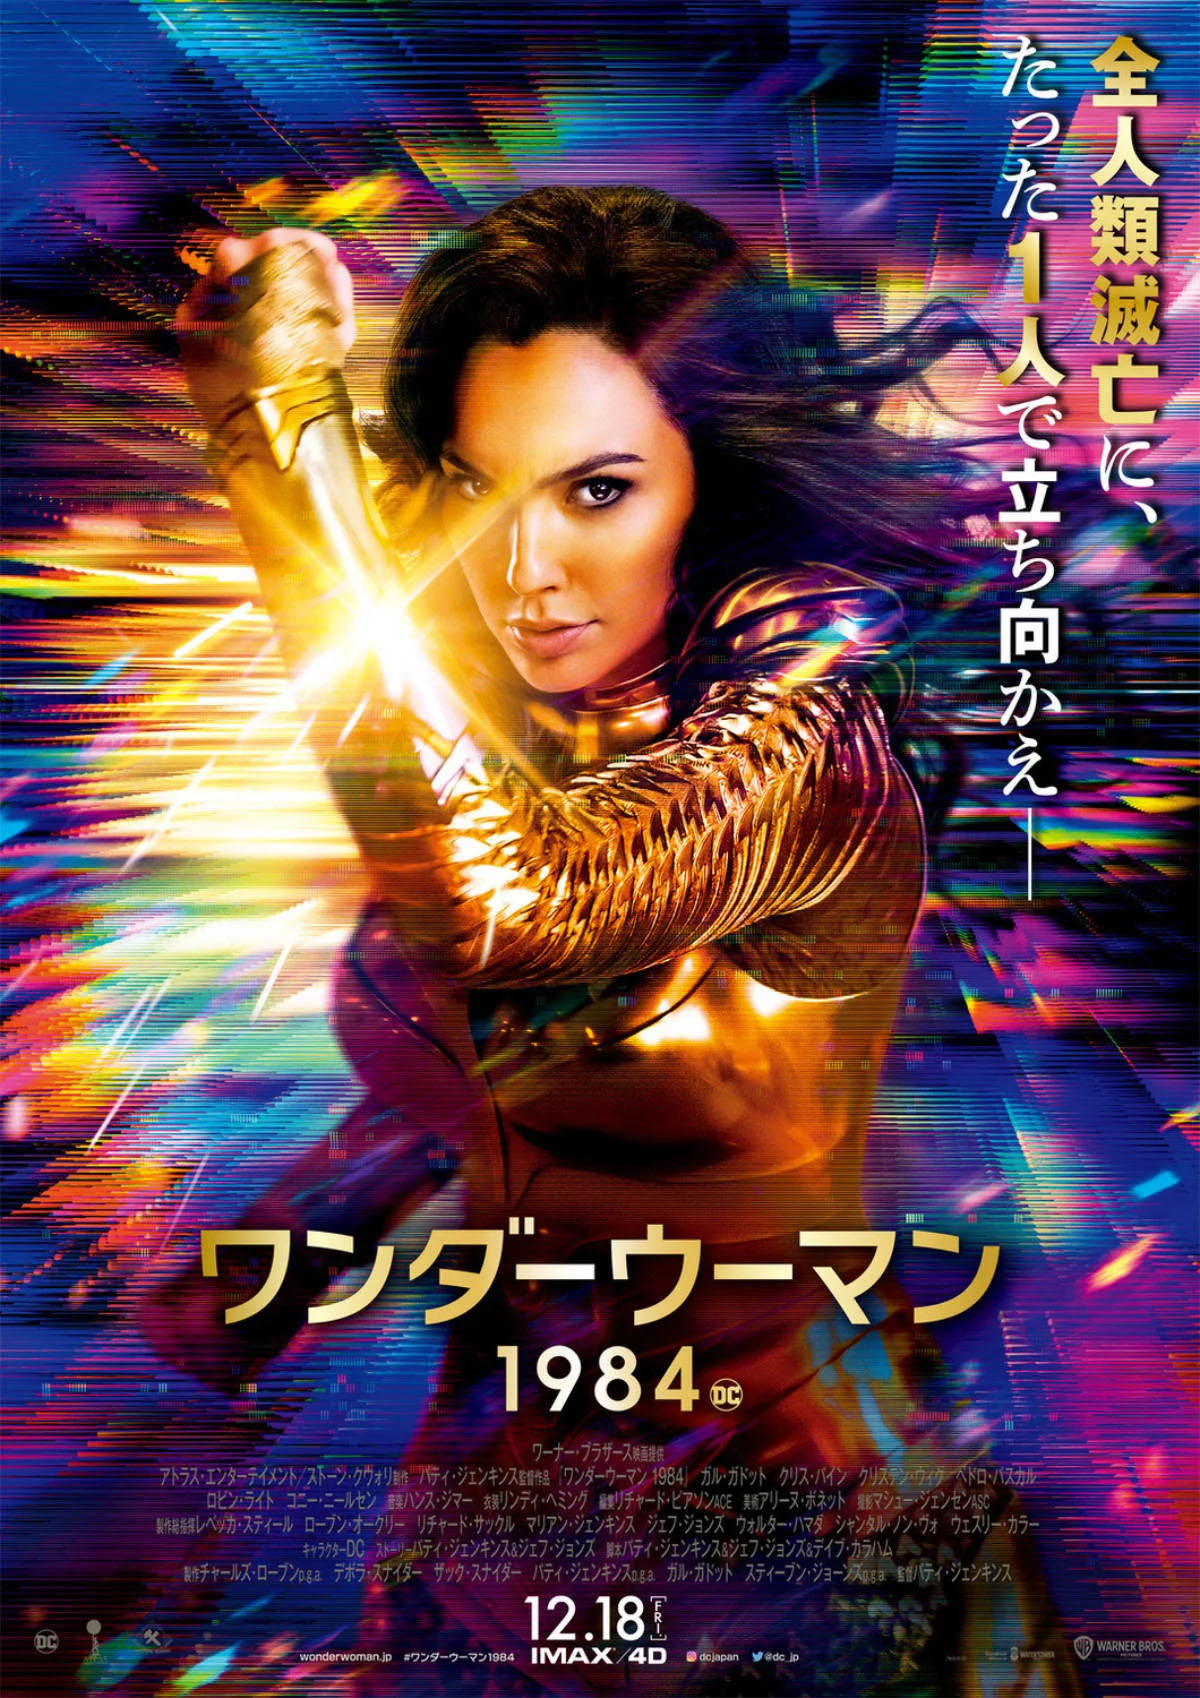 Wonder Woman 1984 Gets a New International Poster